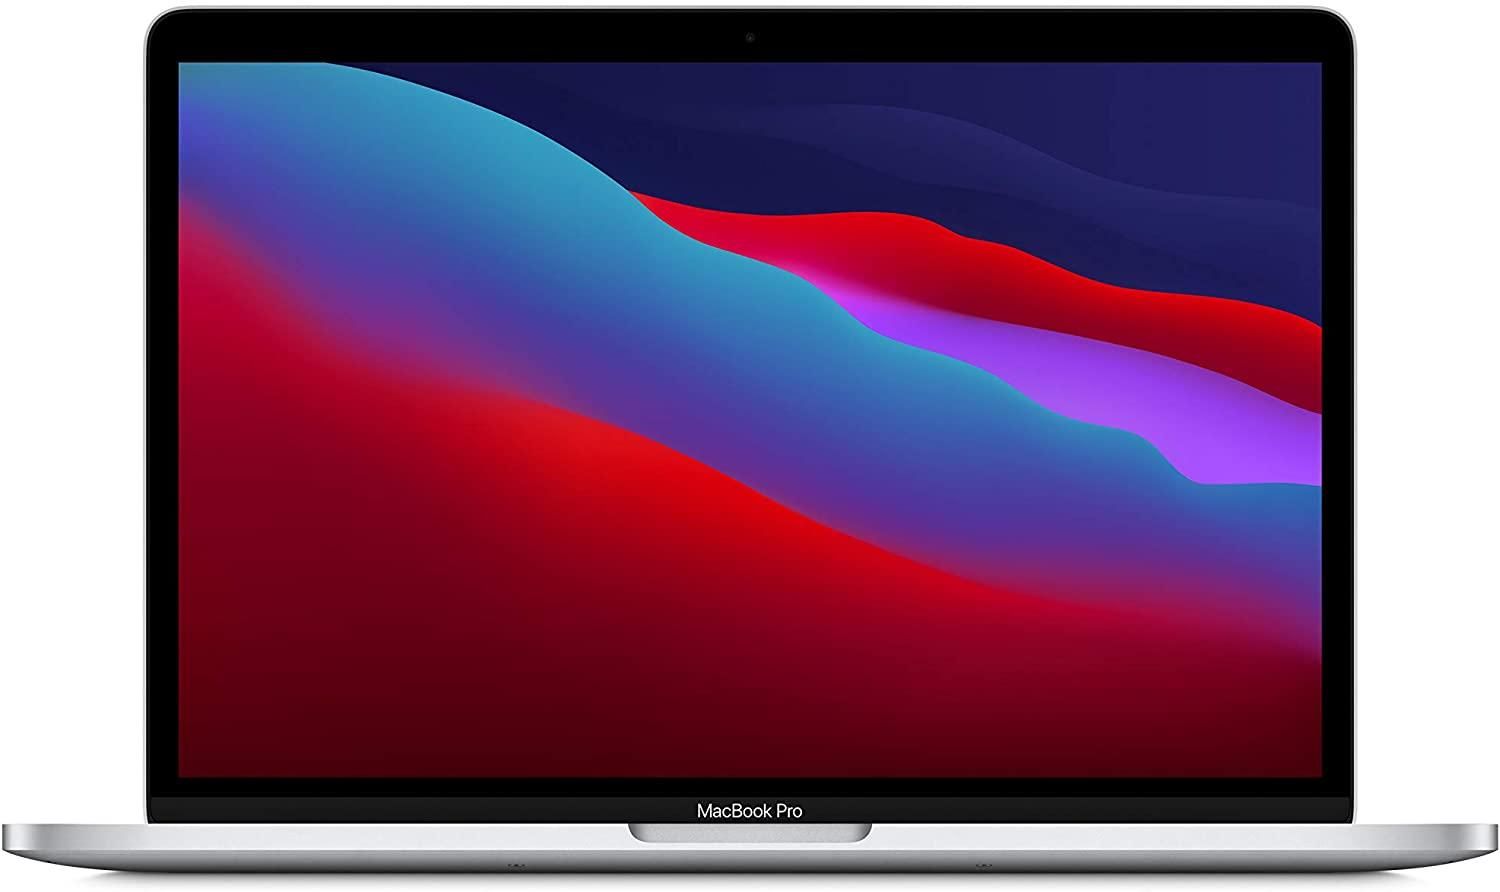 13-inch MacBook Pro product box image